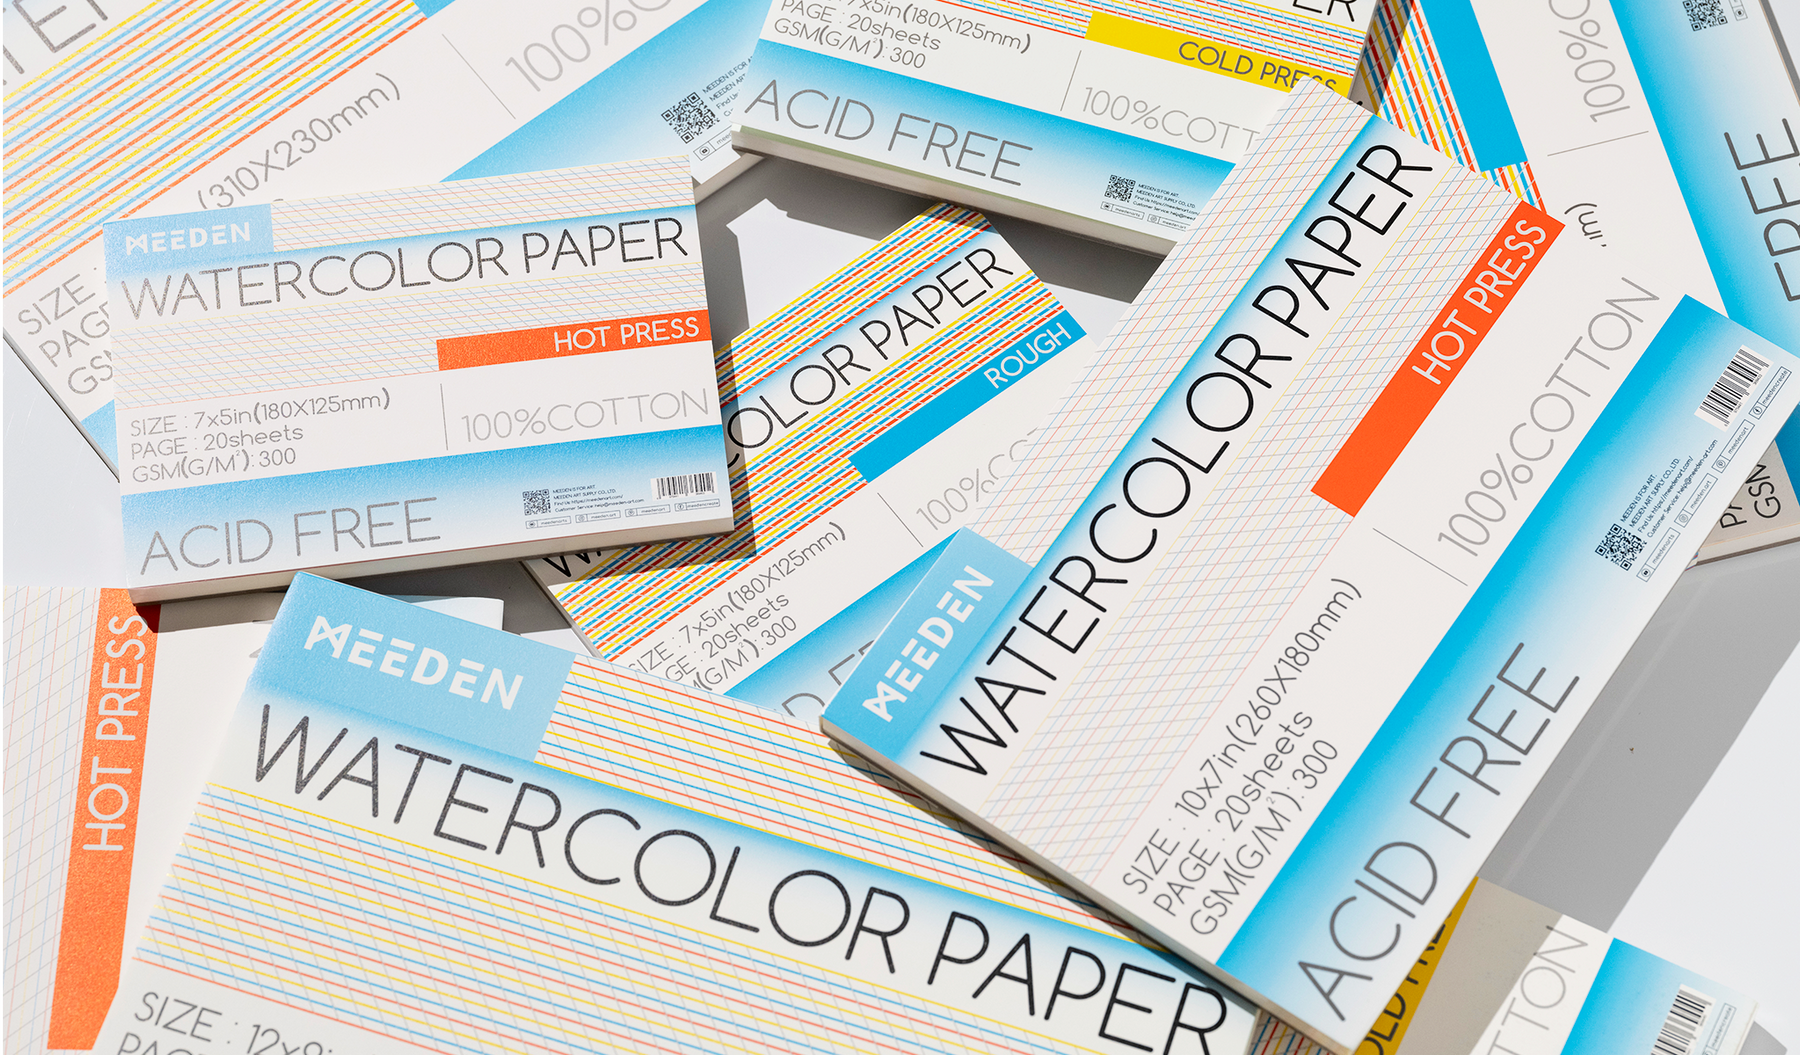 How to Choose Watercolor Paper - Hot Press vs Cold Press vs Rough